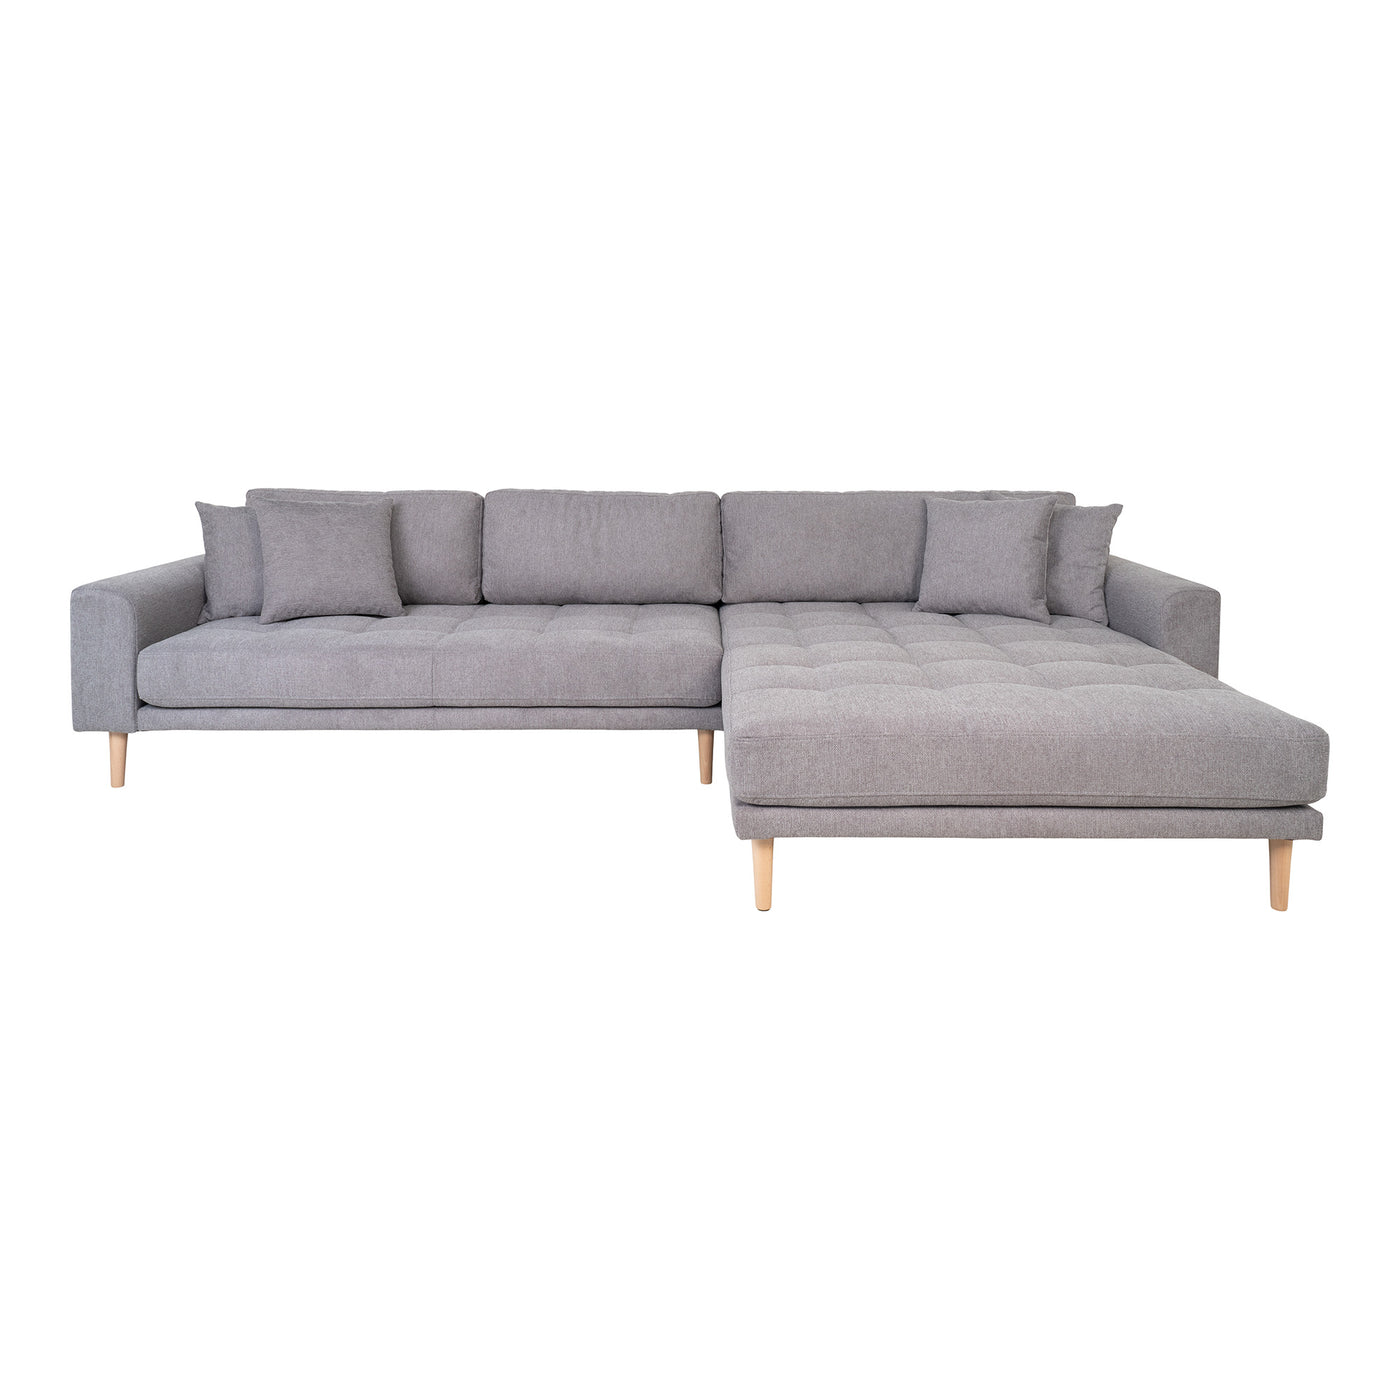 Venedig chaiselong sofa i grå møbelstof med ben i naturtræ